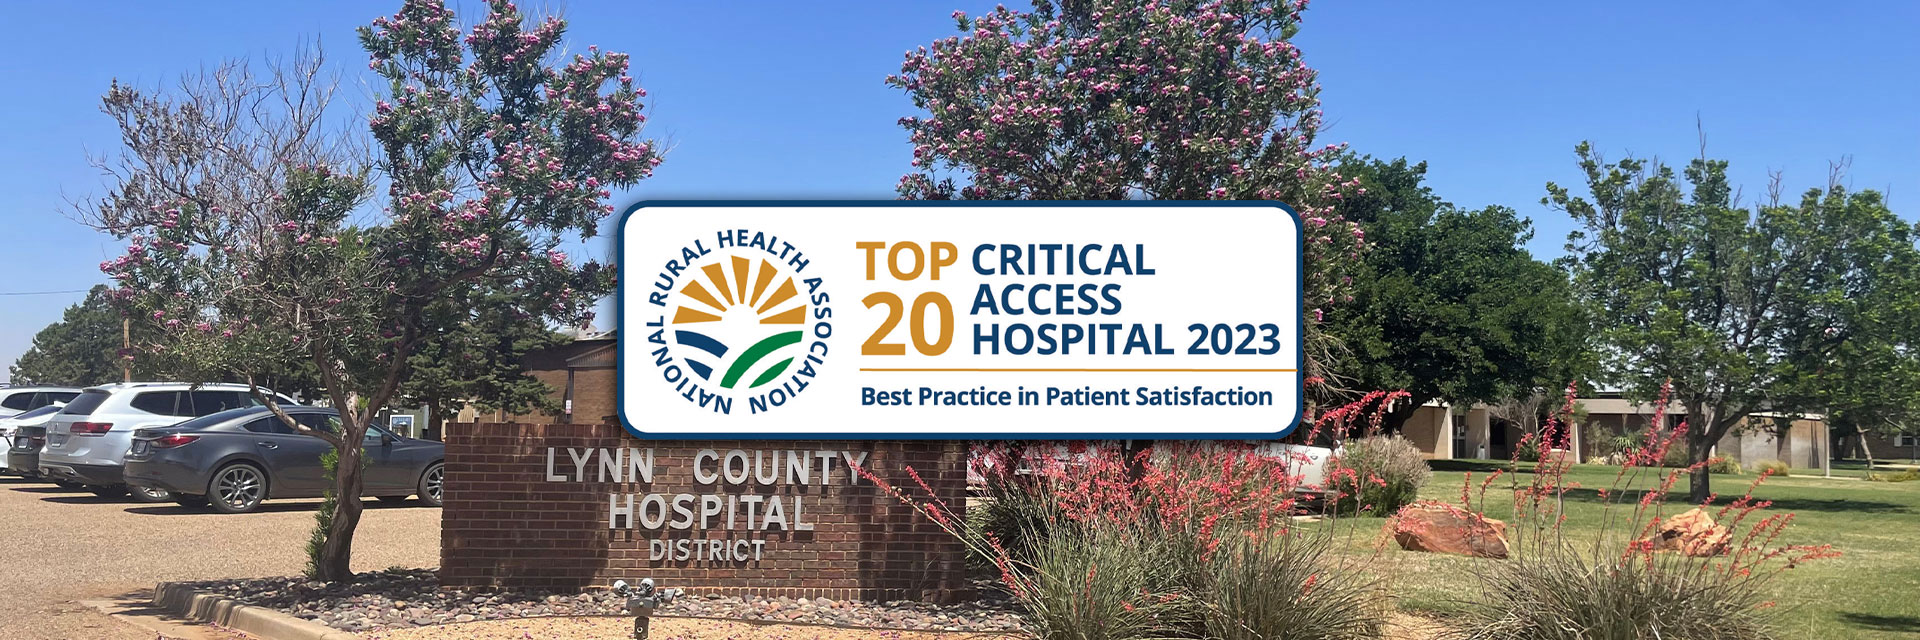 National Rural Health  Association Top 20 Critical Access Hospital 2023 Best Practice in Patient Satisfaction